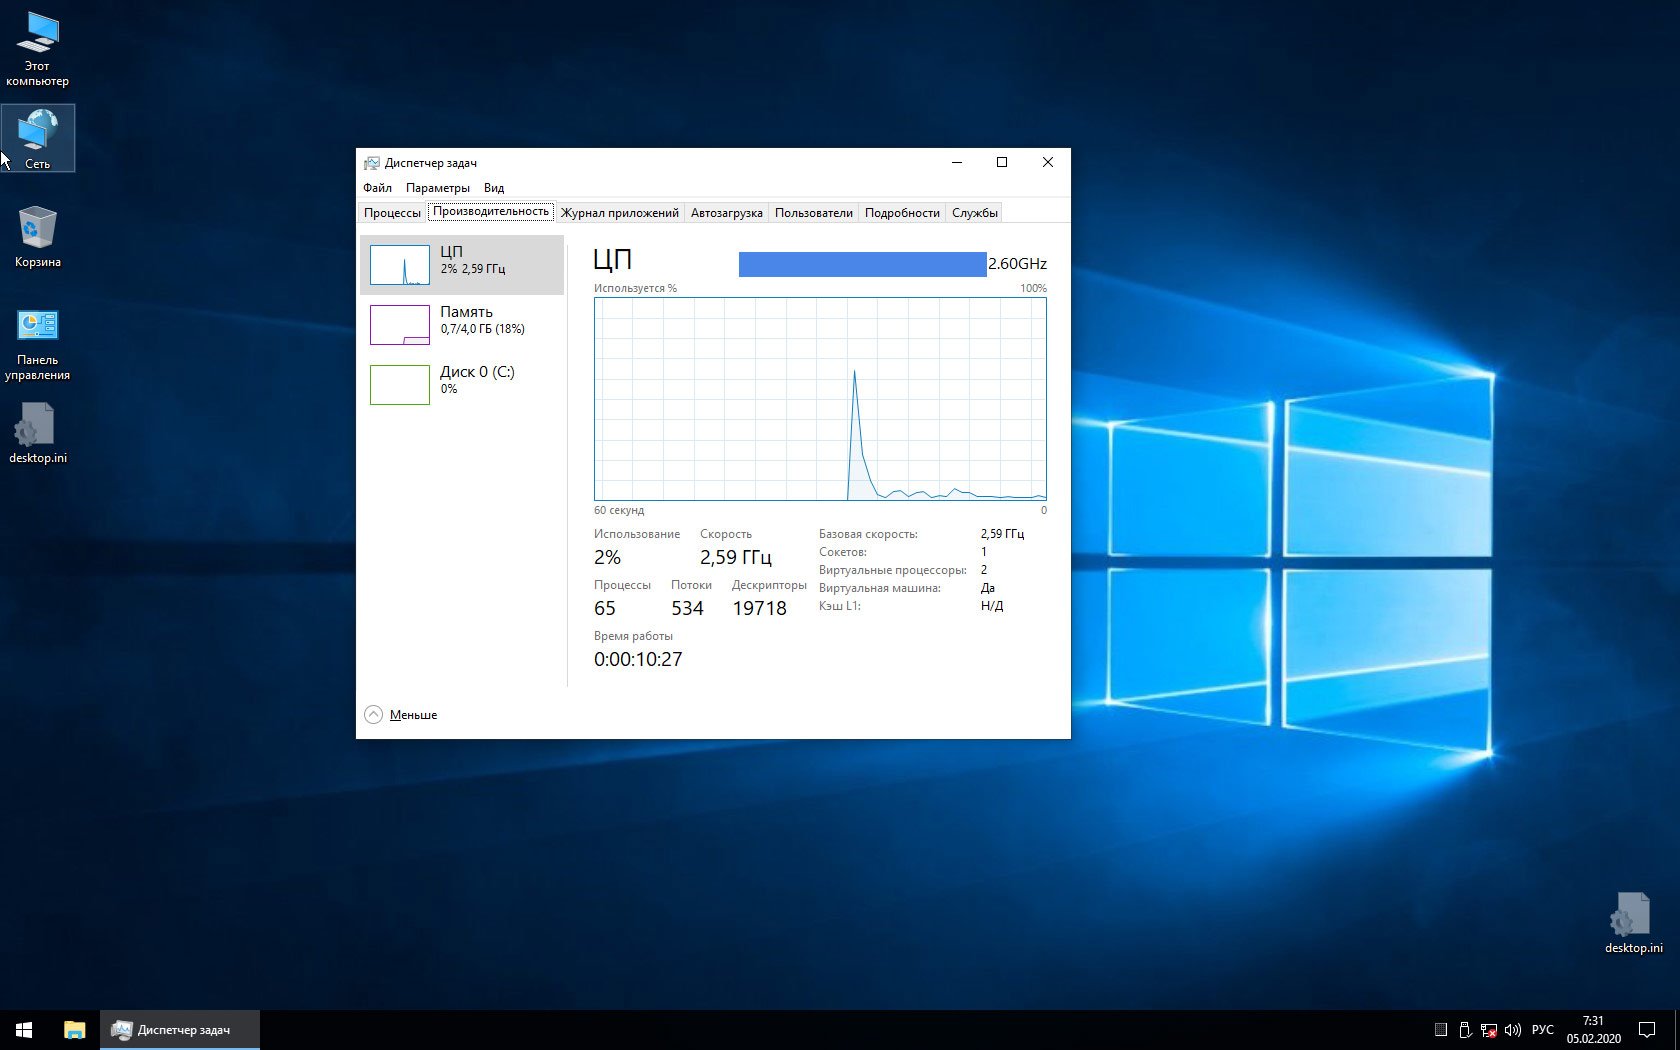 windows 10 pro 1809 iso download 64 bit